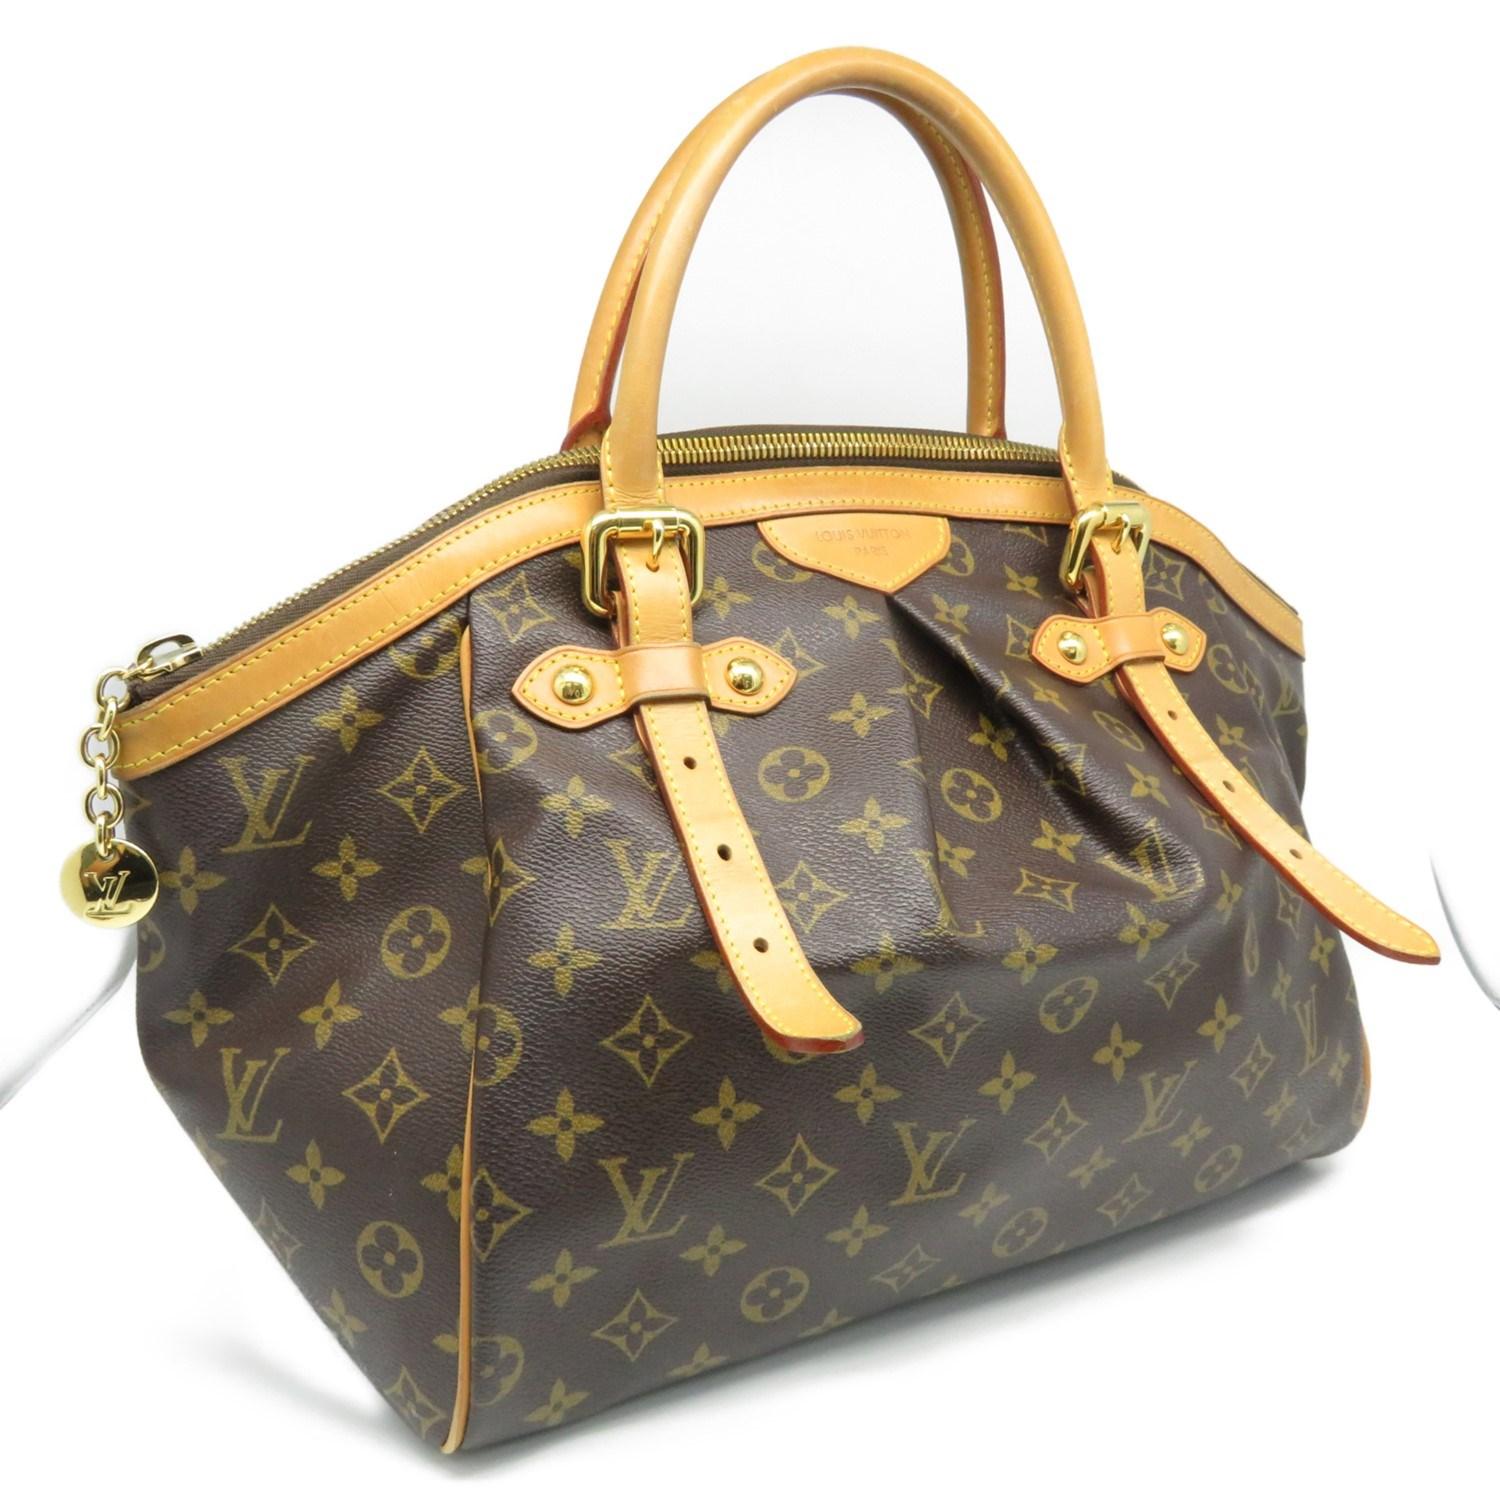 Louis Vuitton Lv Tivoli Gm Hand Bag M40144 Monogram Brown 5640 in Brown - Lyst